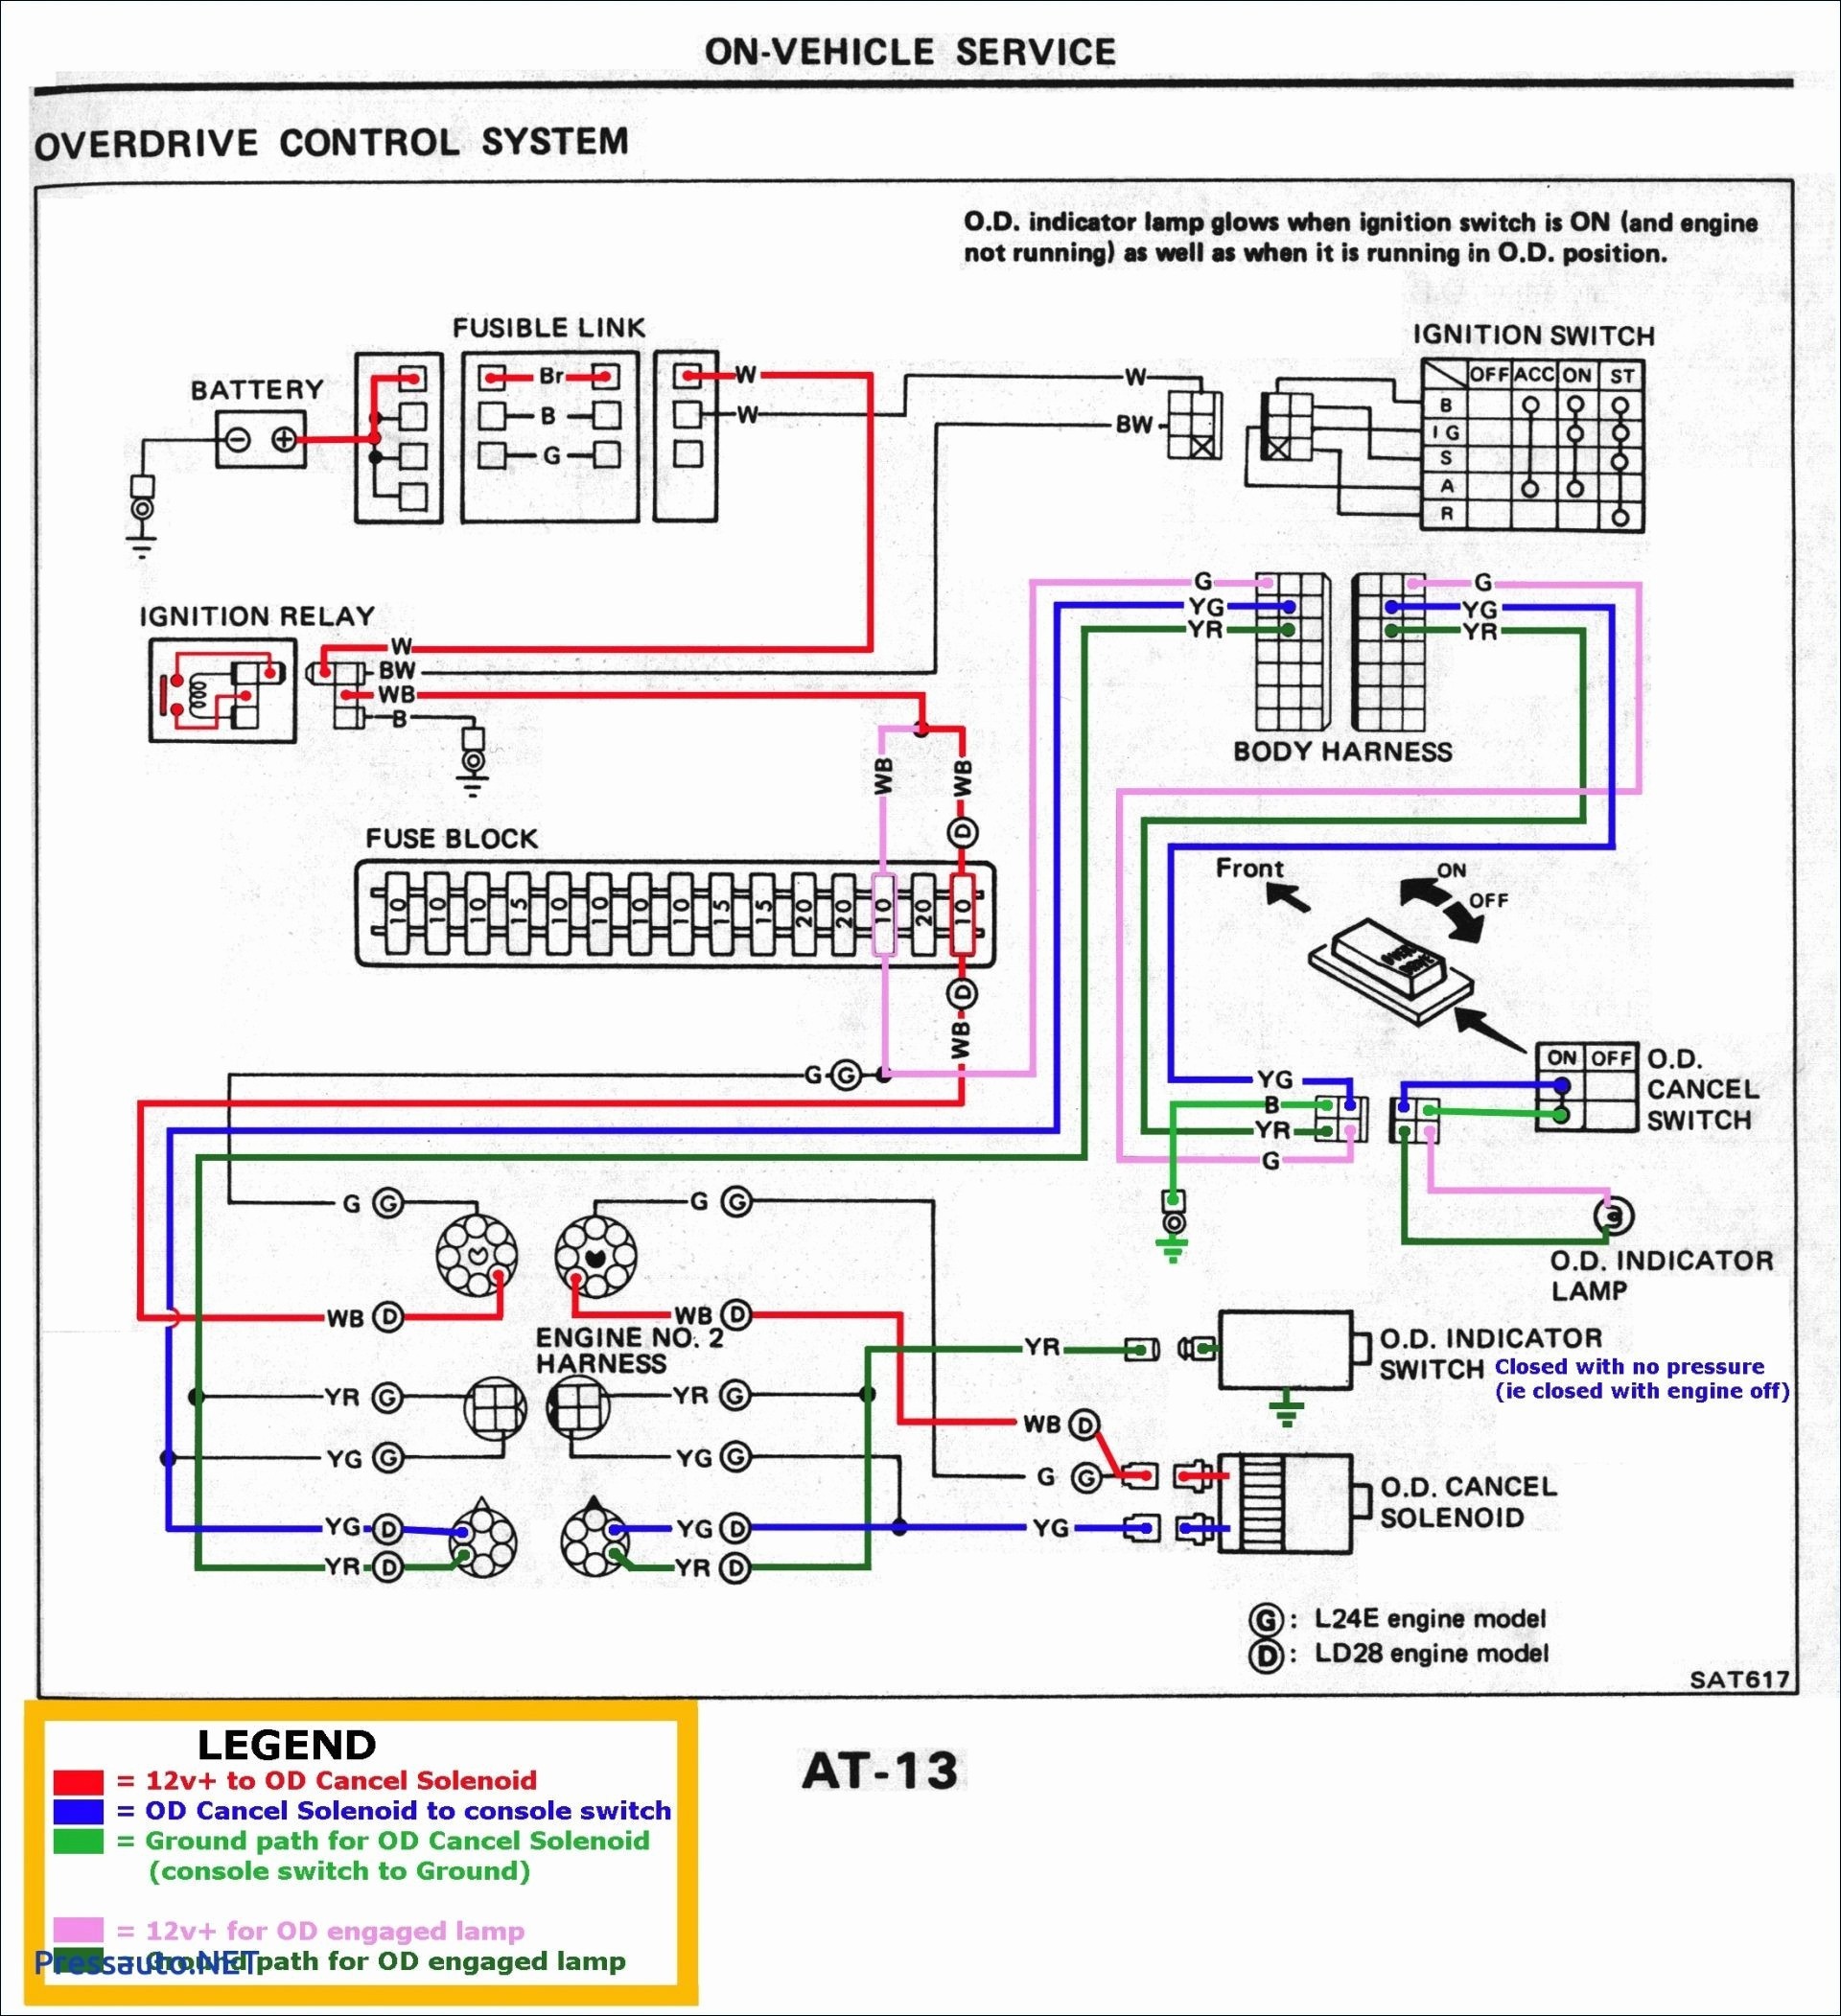 Wiring Diagram Relay 12v Save Wiring Diagram Relay Spotlights Save